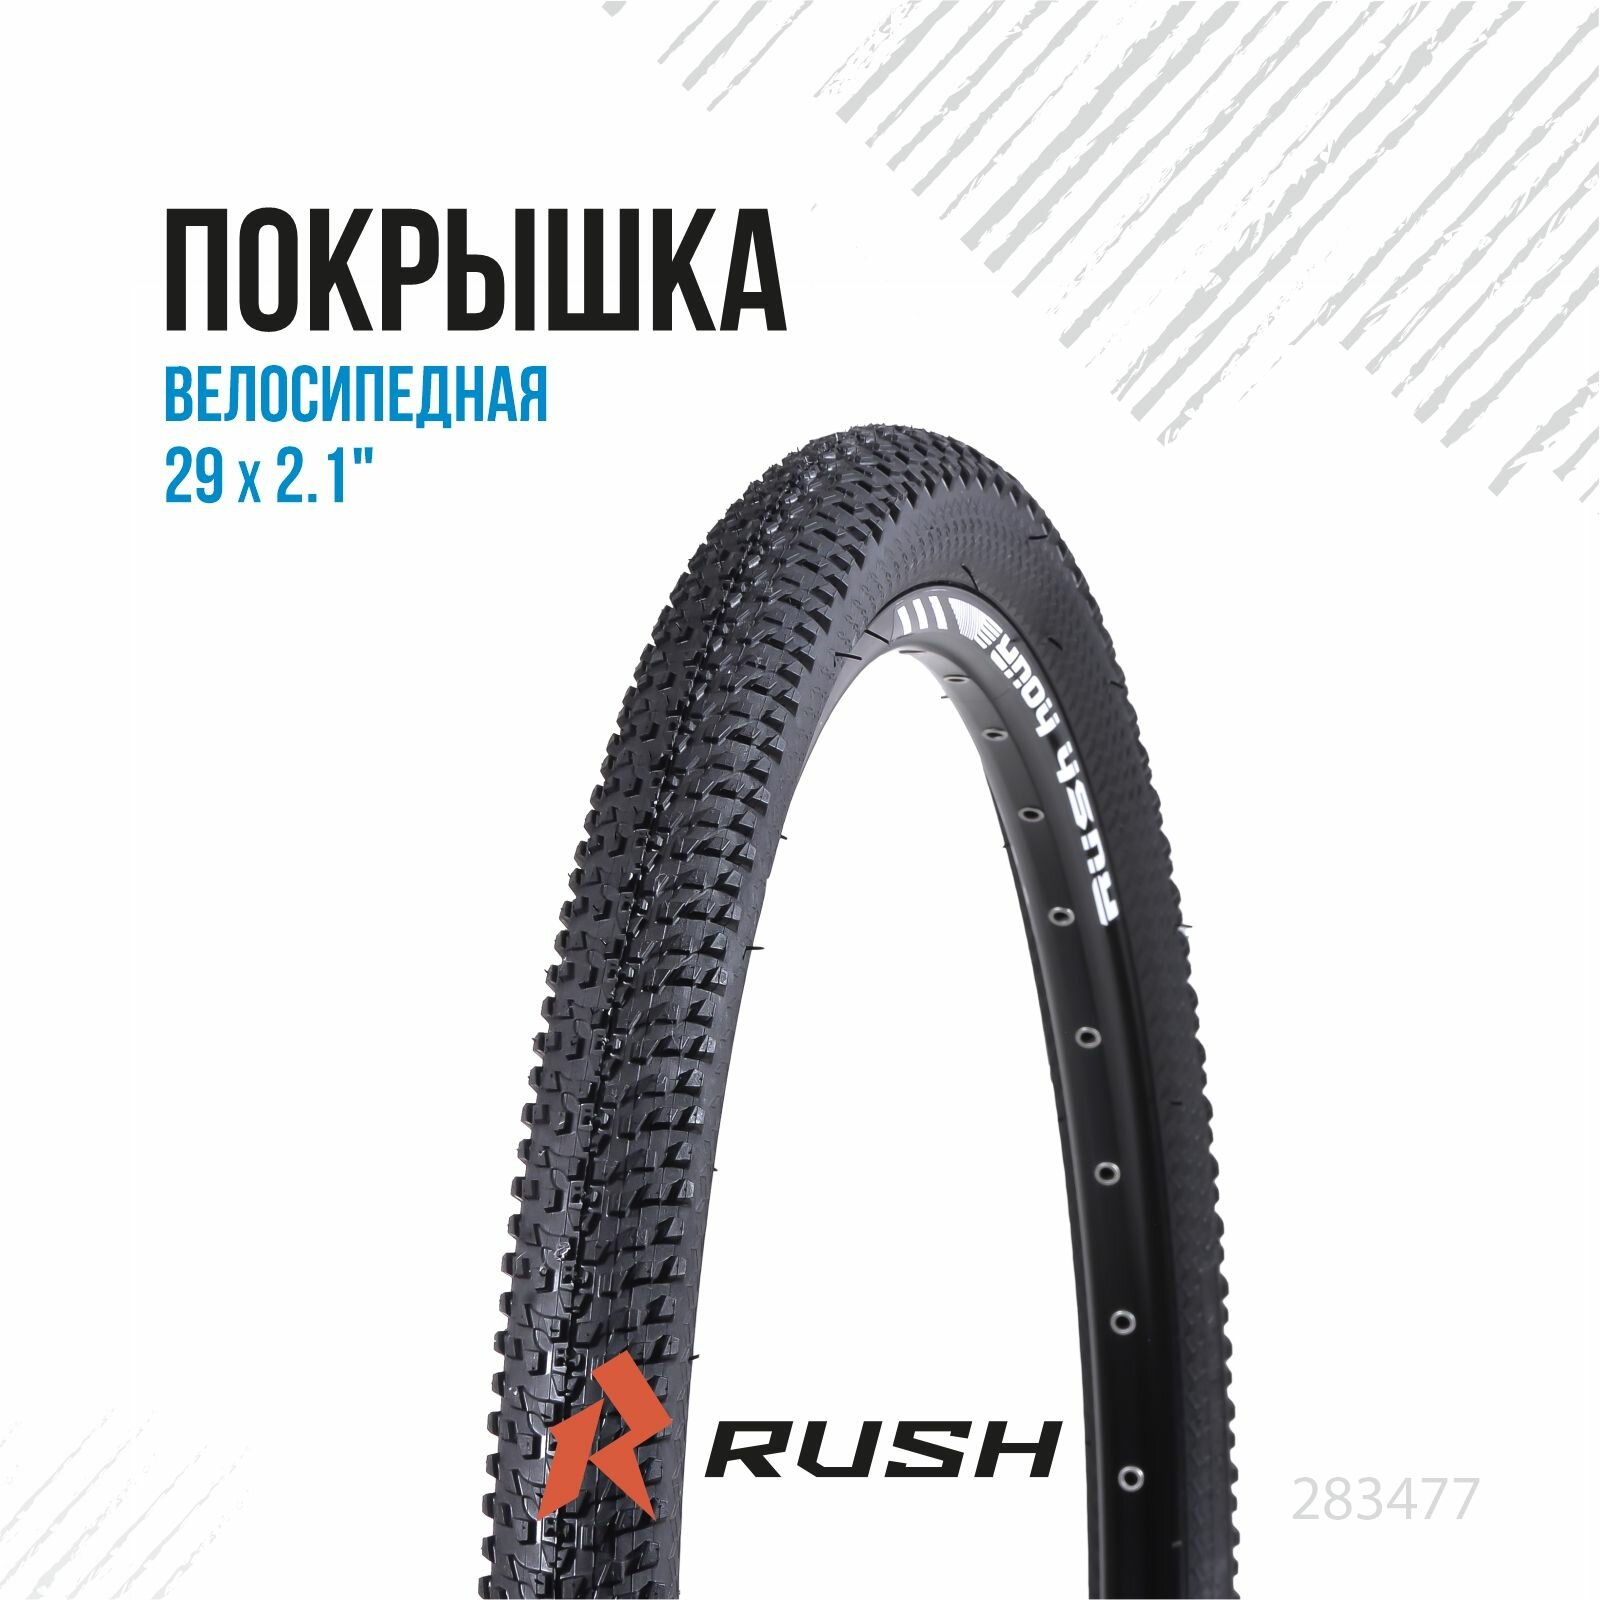 Велопокрышка 29" дюймов х ширина 2.1 RS9-014 RUSH HOUR шина/покрышка для велосипеда/